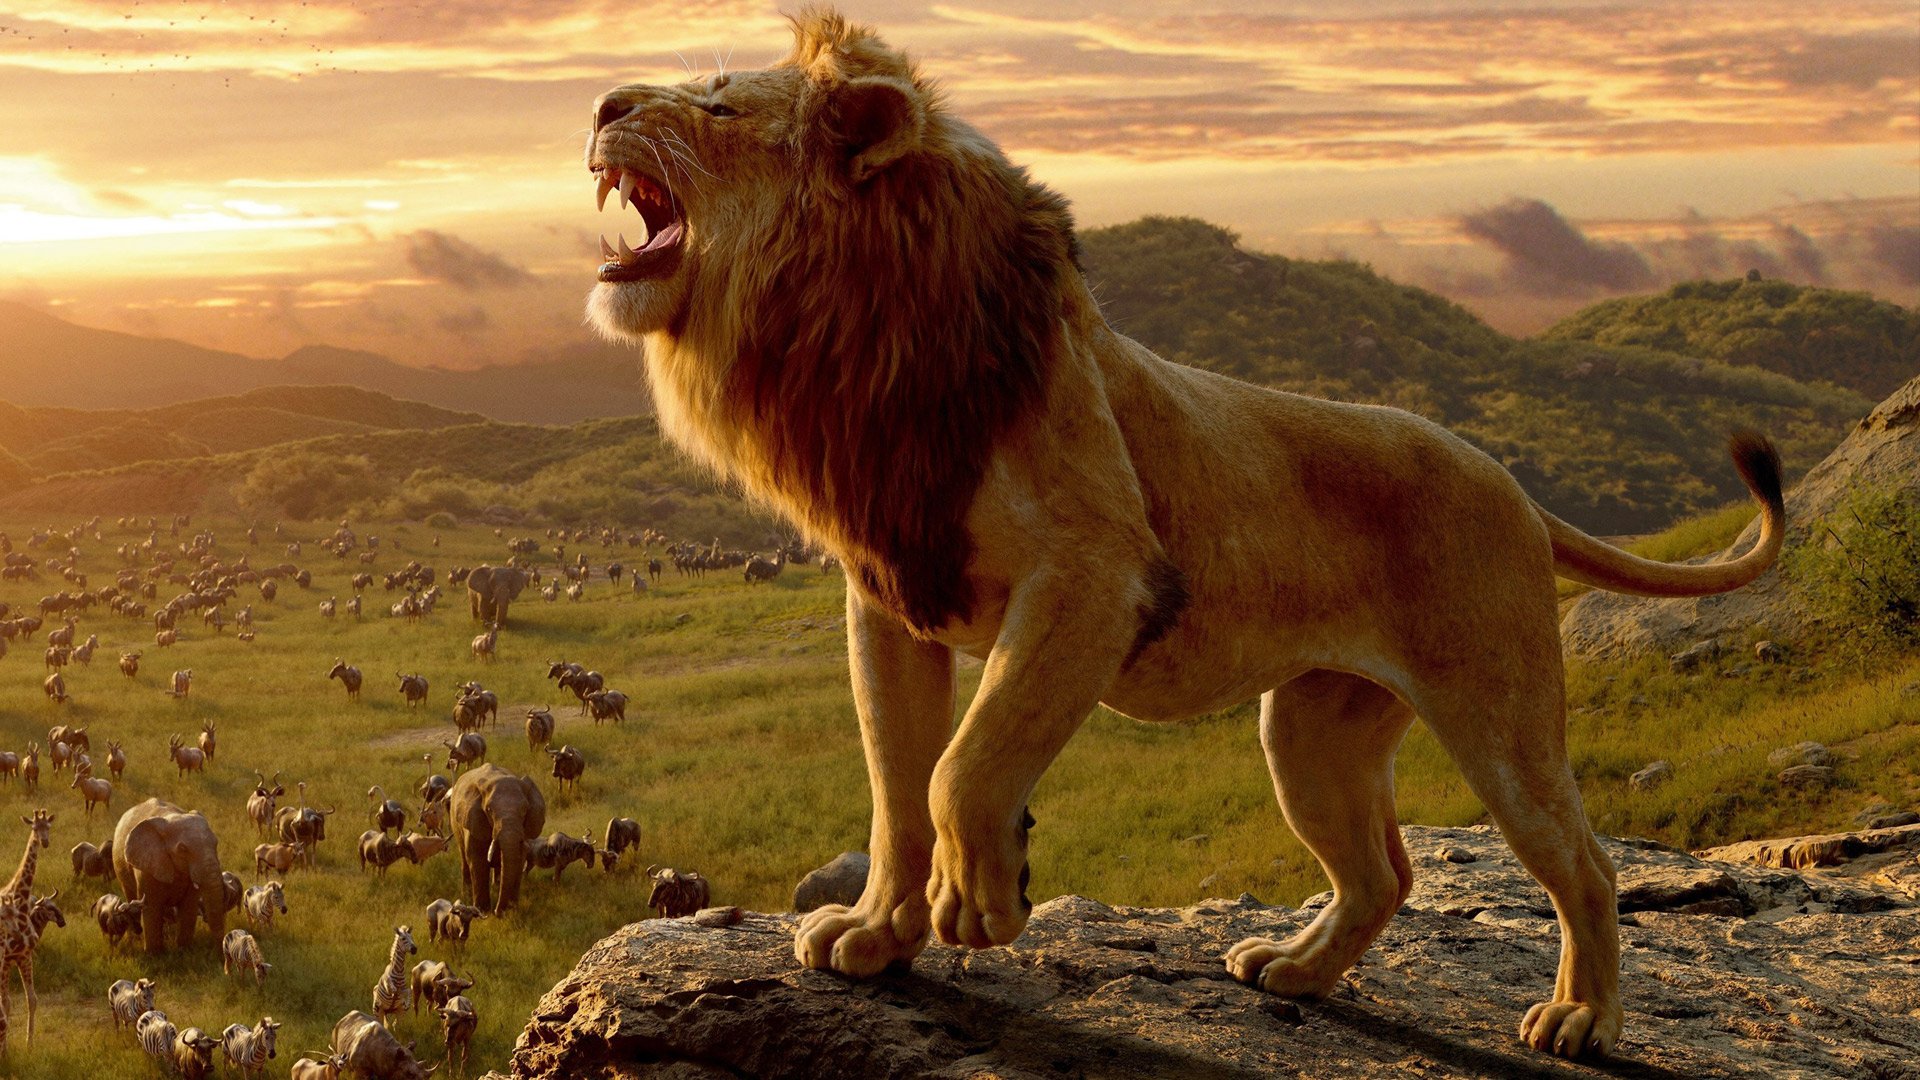 mufasa: the lion king